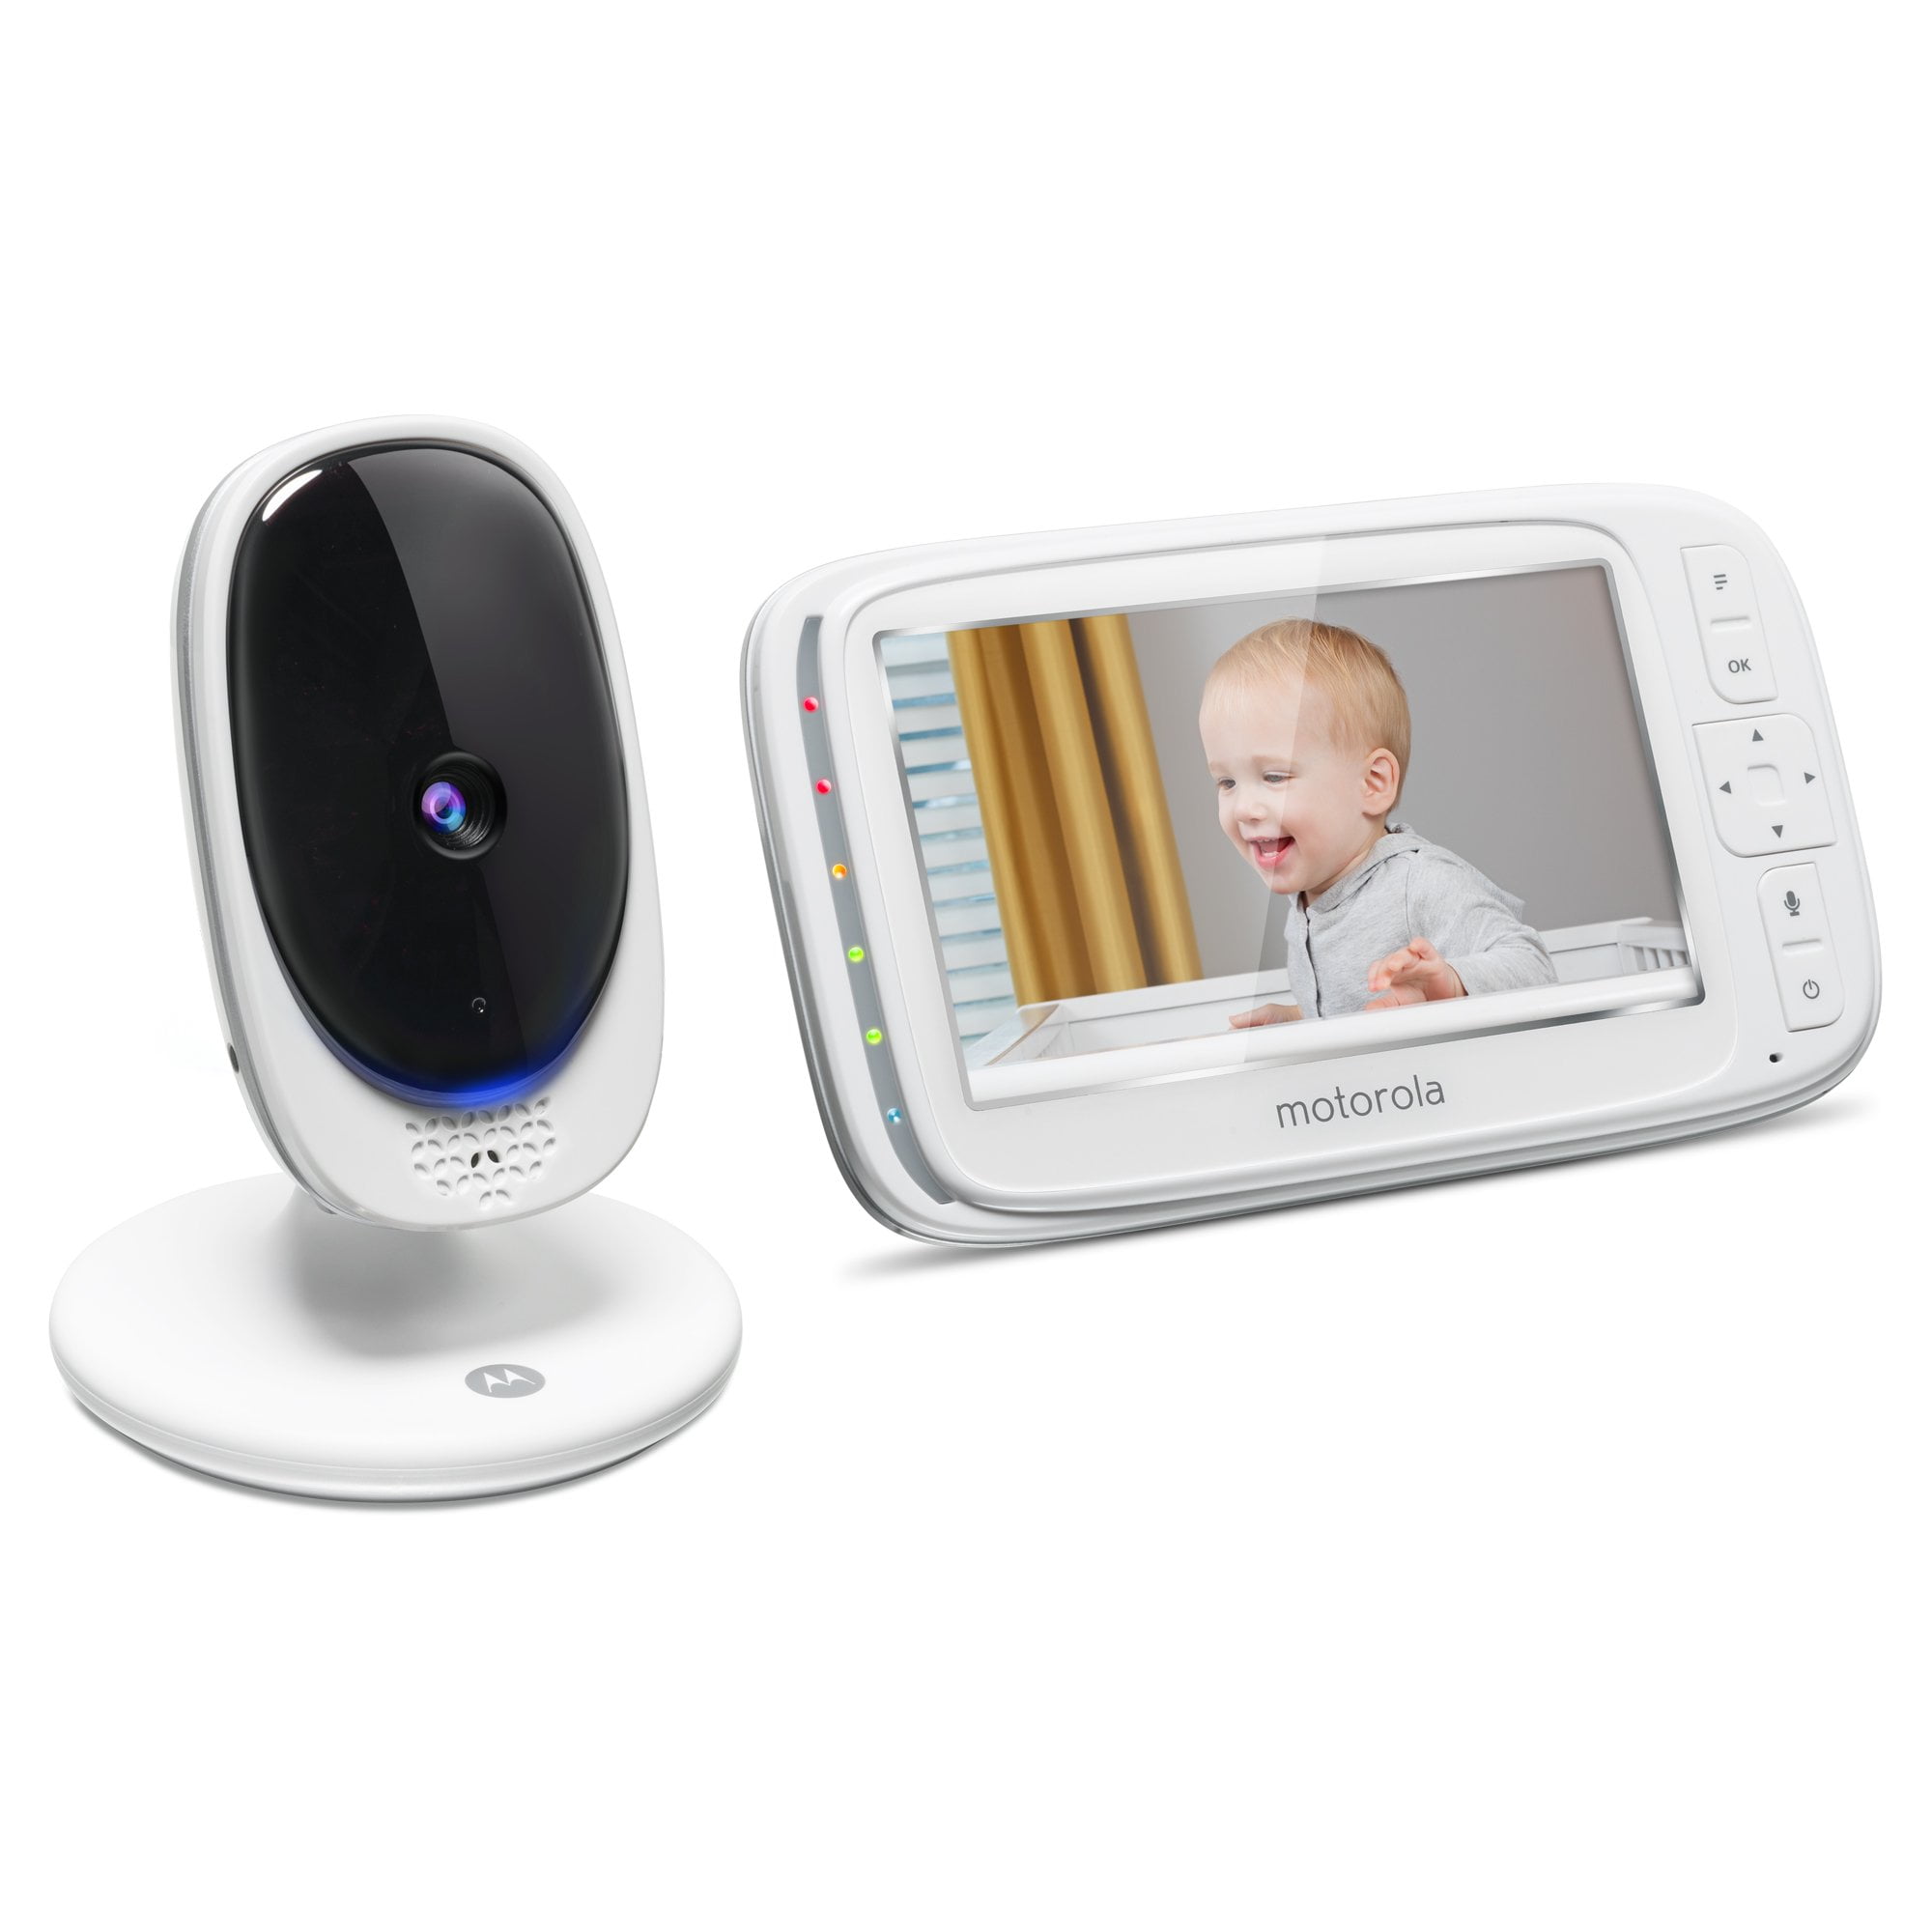 motorola comfort 50 digital video audio baby monitor with 5 inch color screen